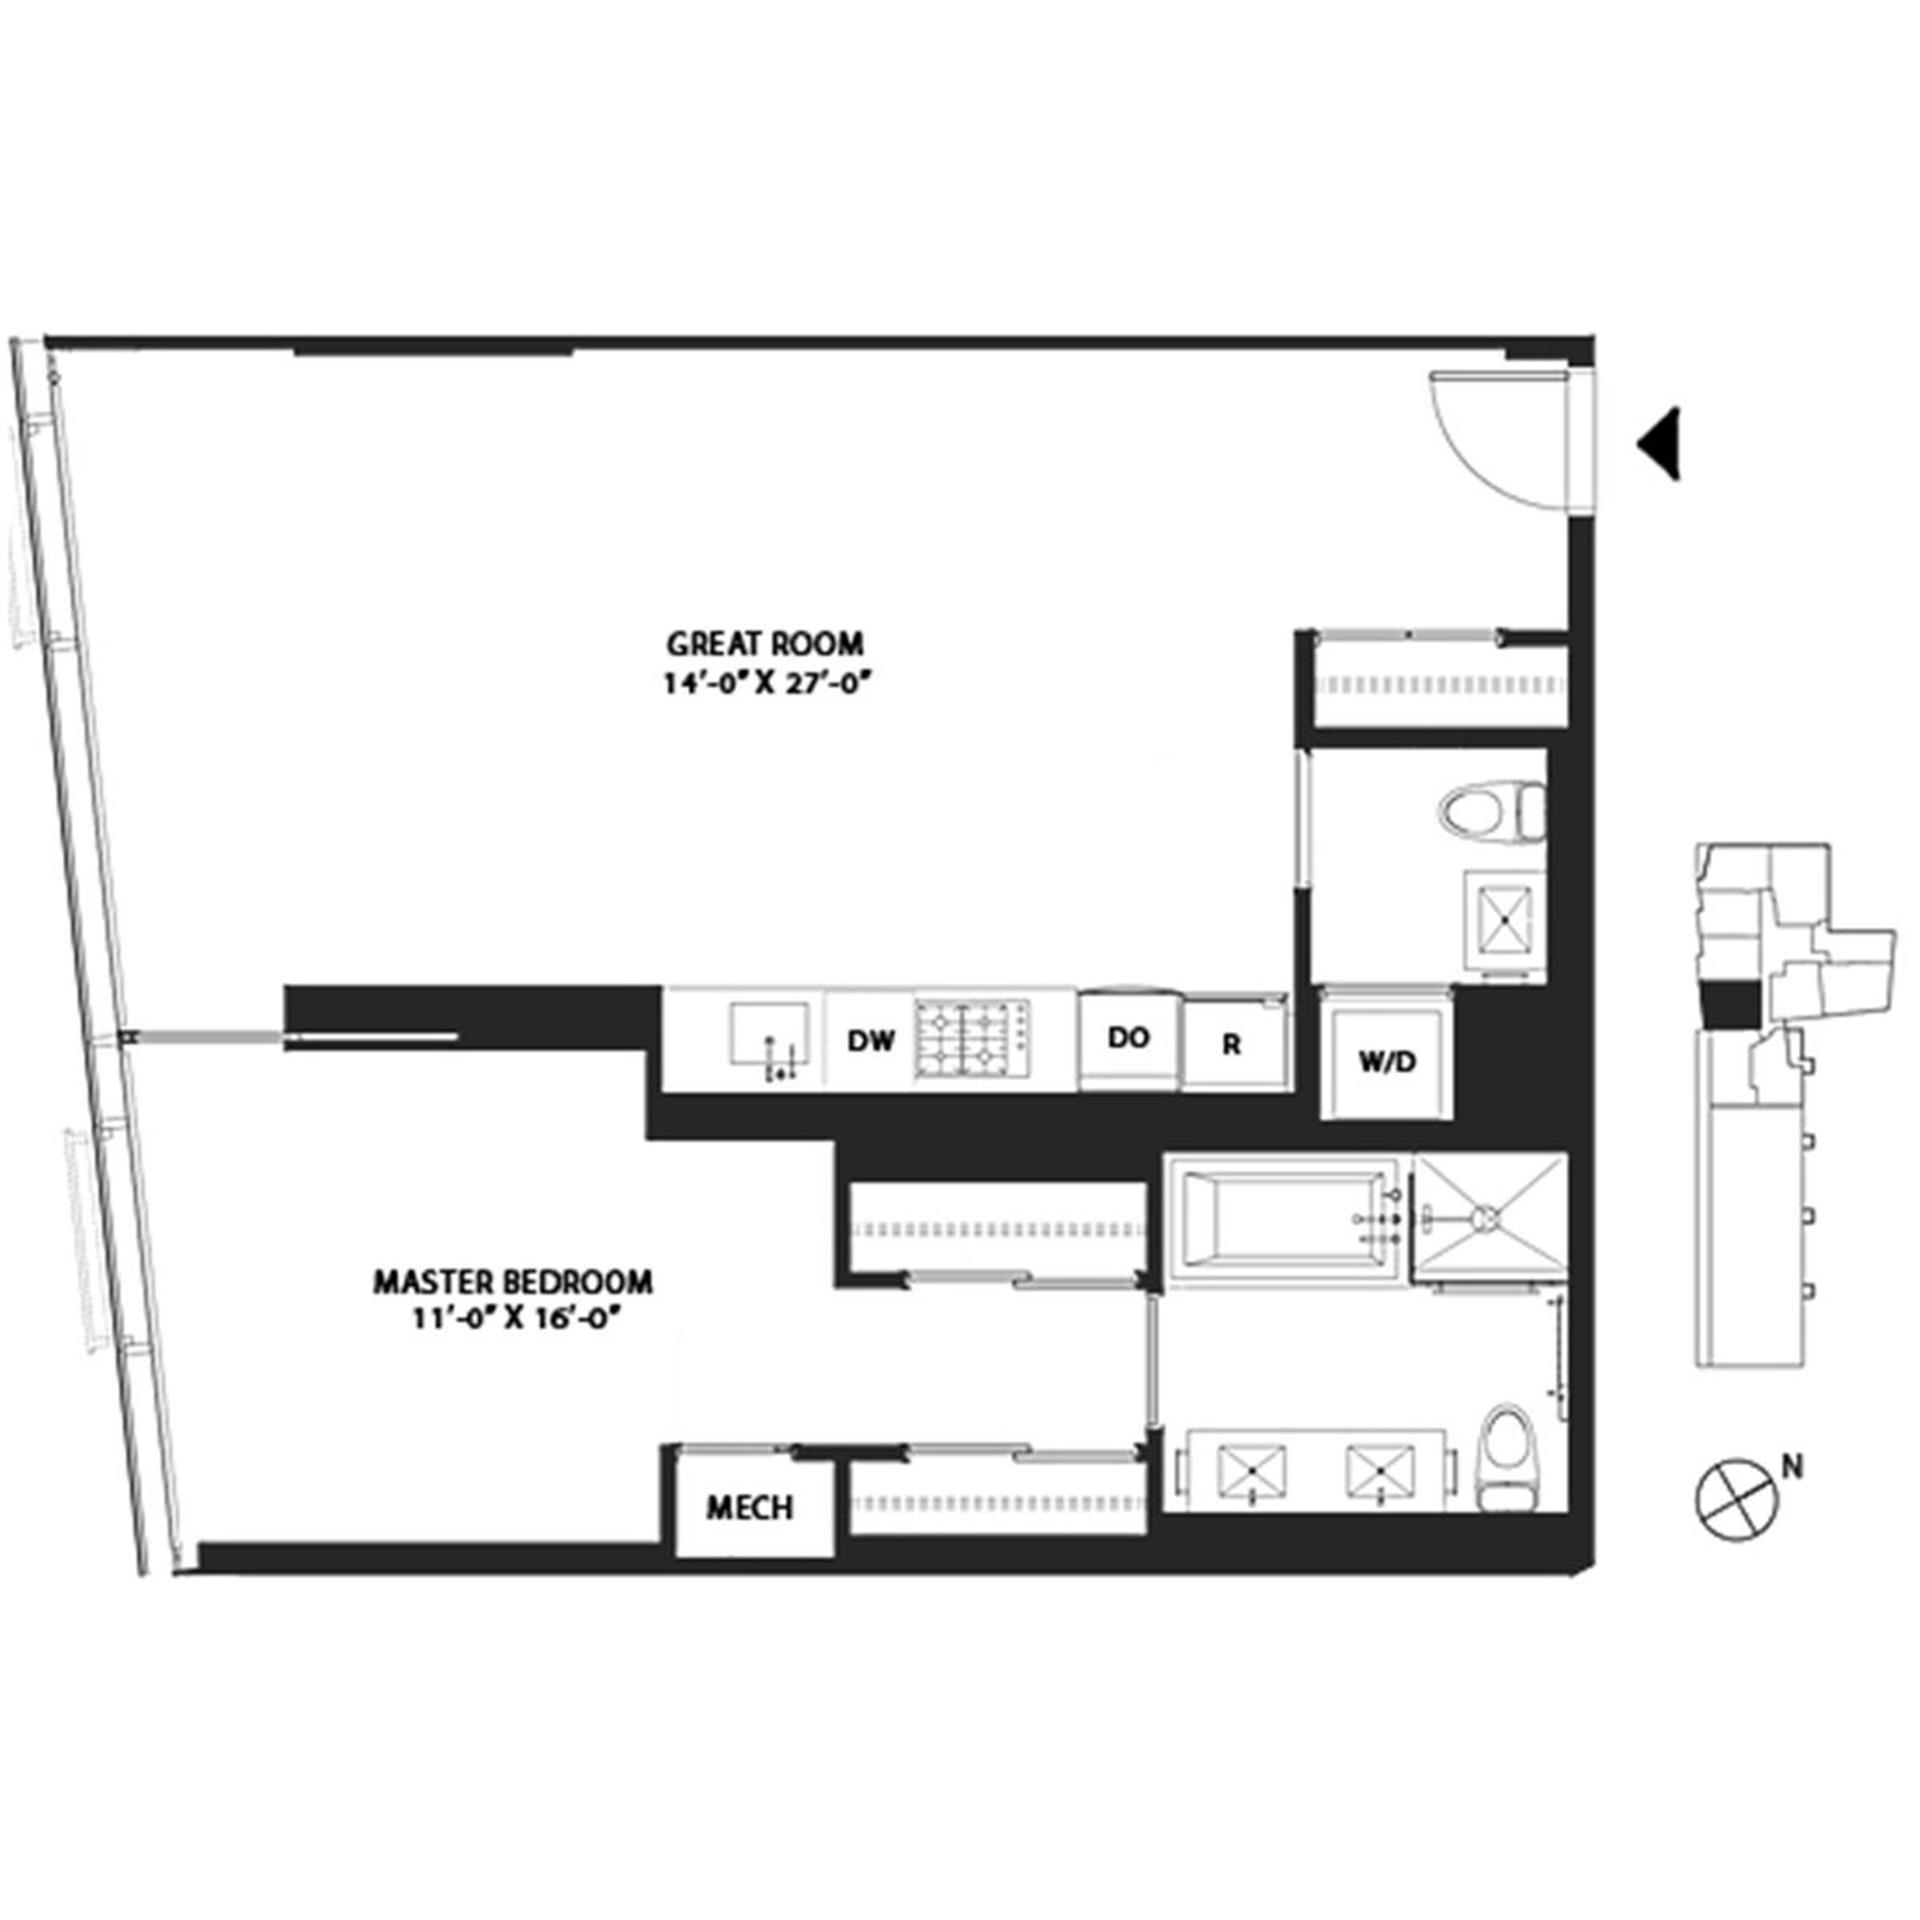 Floorplan for 425 West 53rd Street, 308